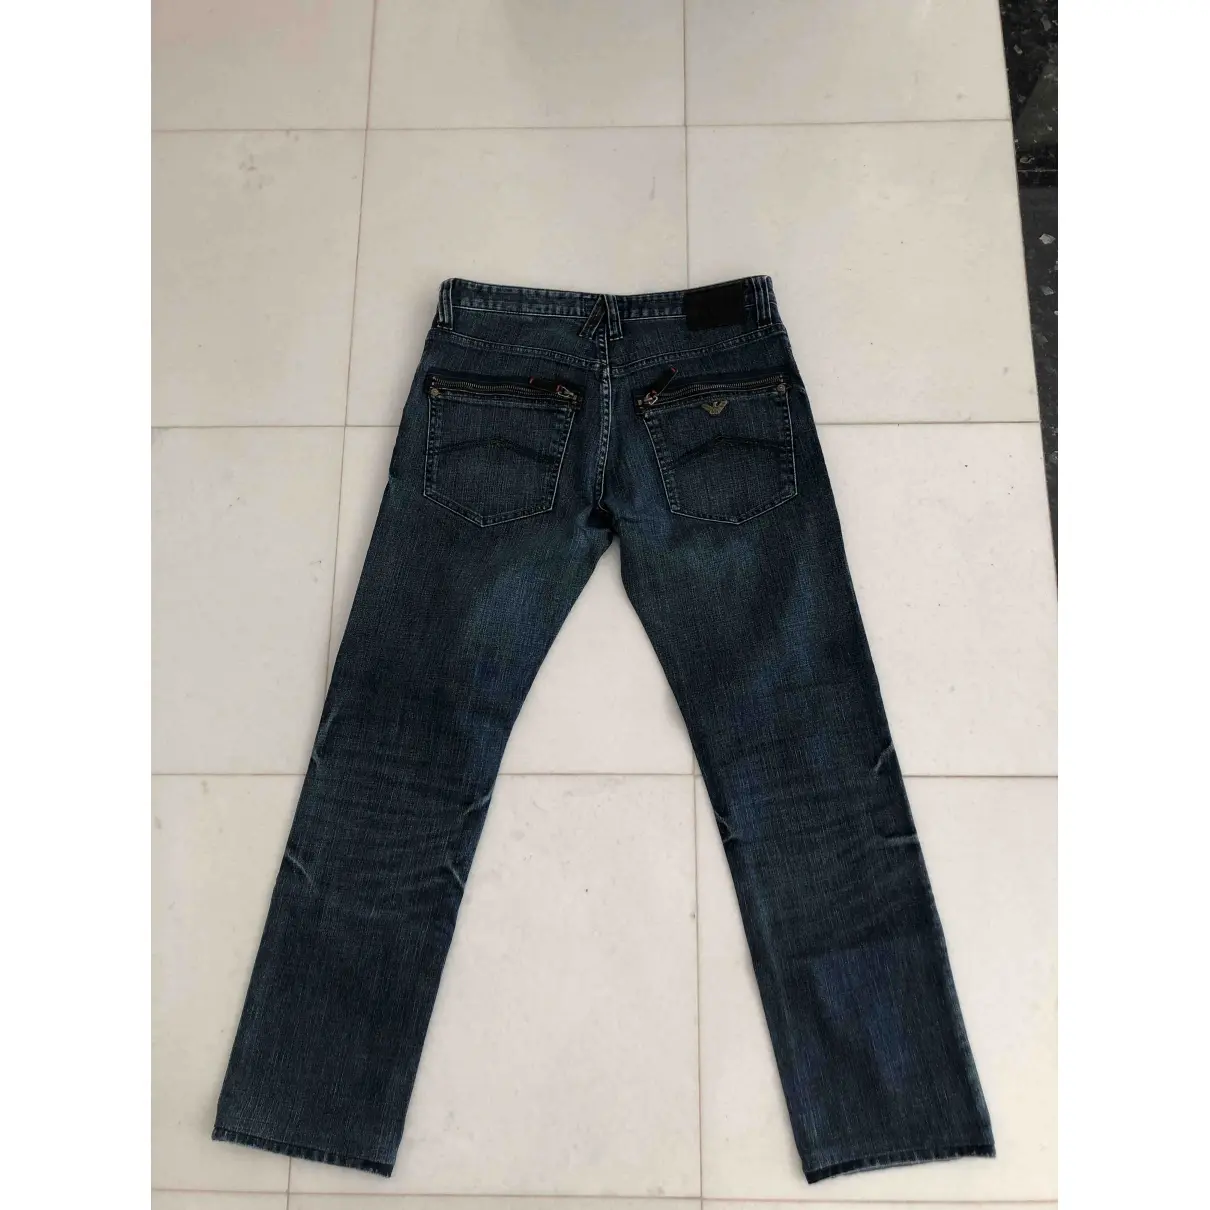 Armani Jeans Slim jean for sale